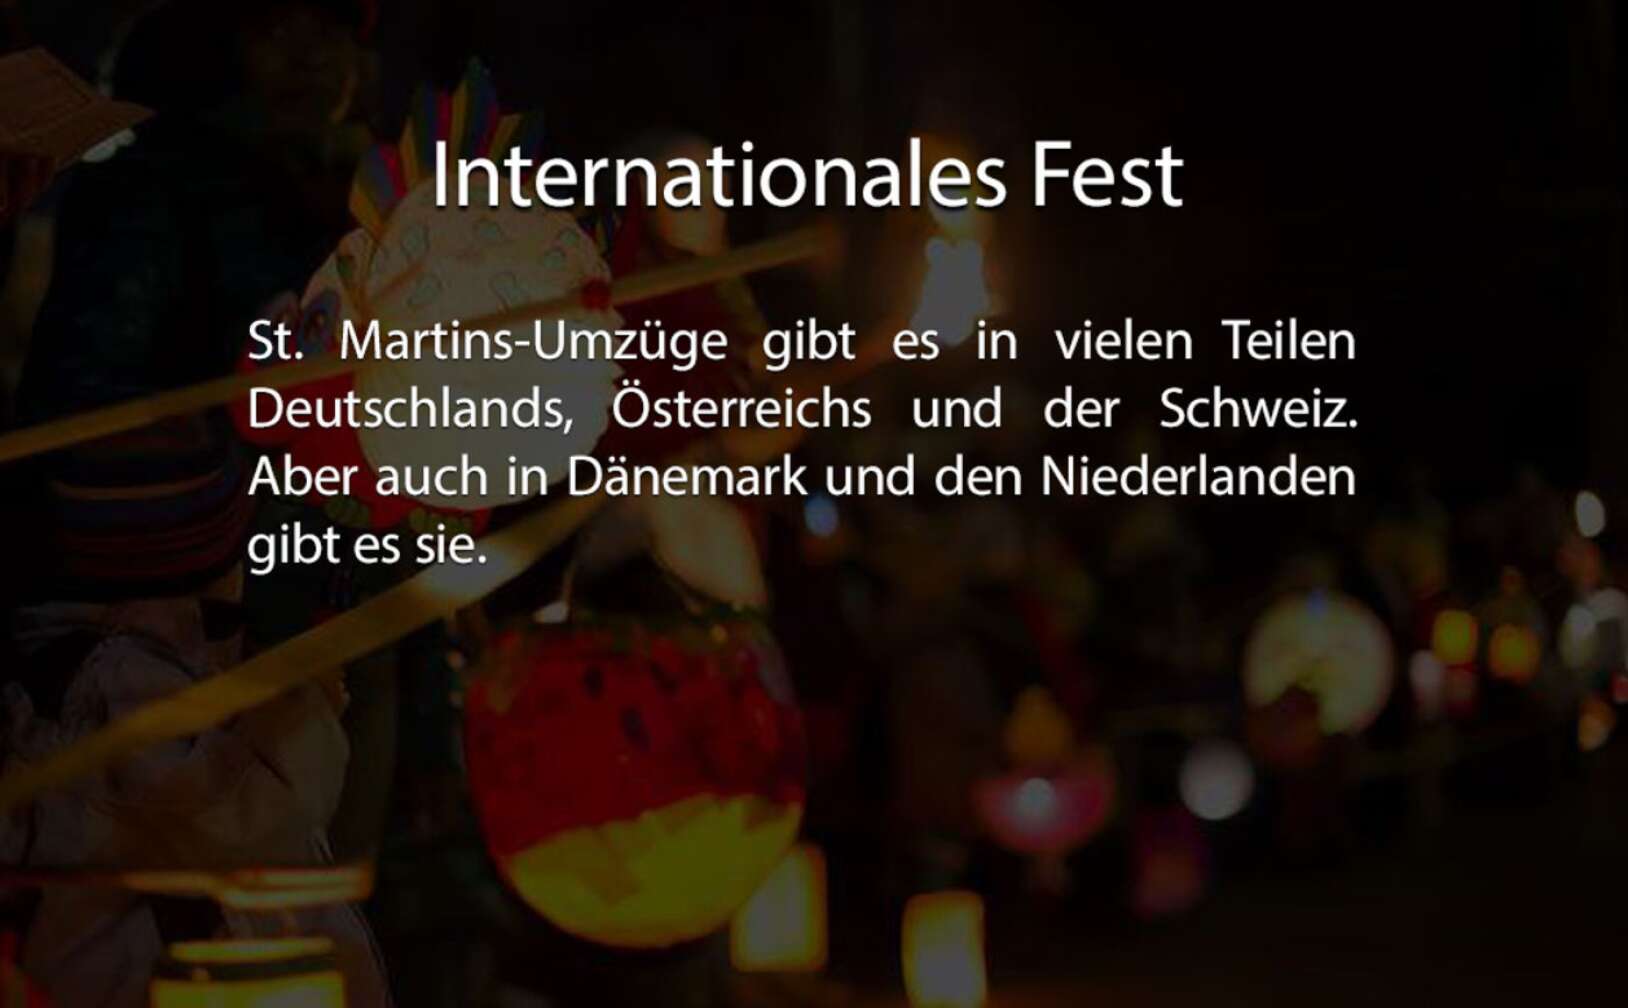 Internationales Fest Text